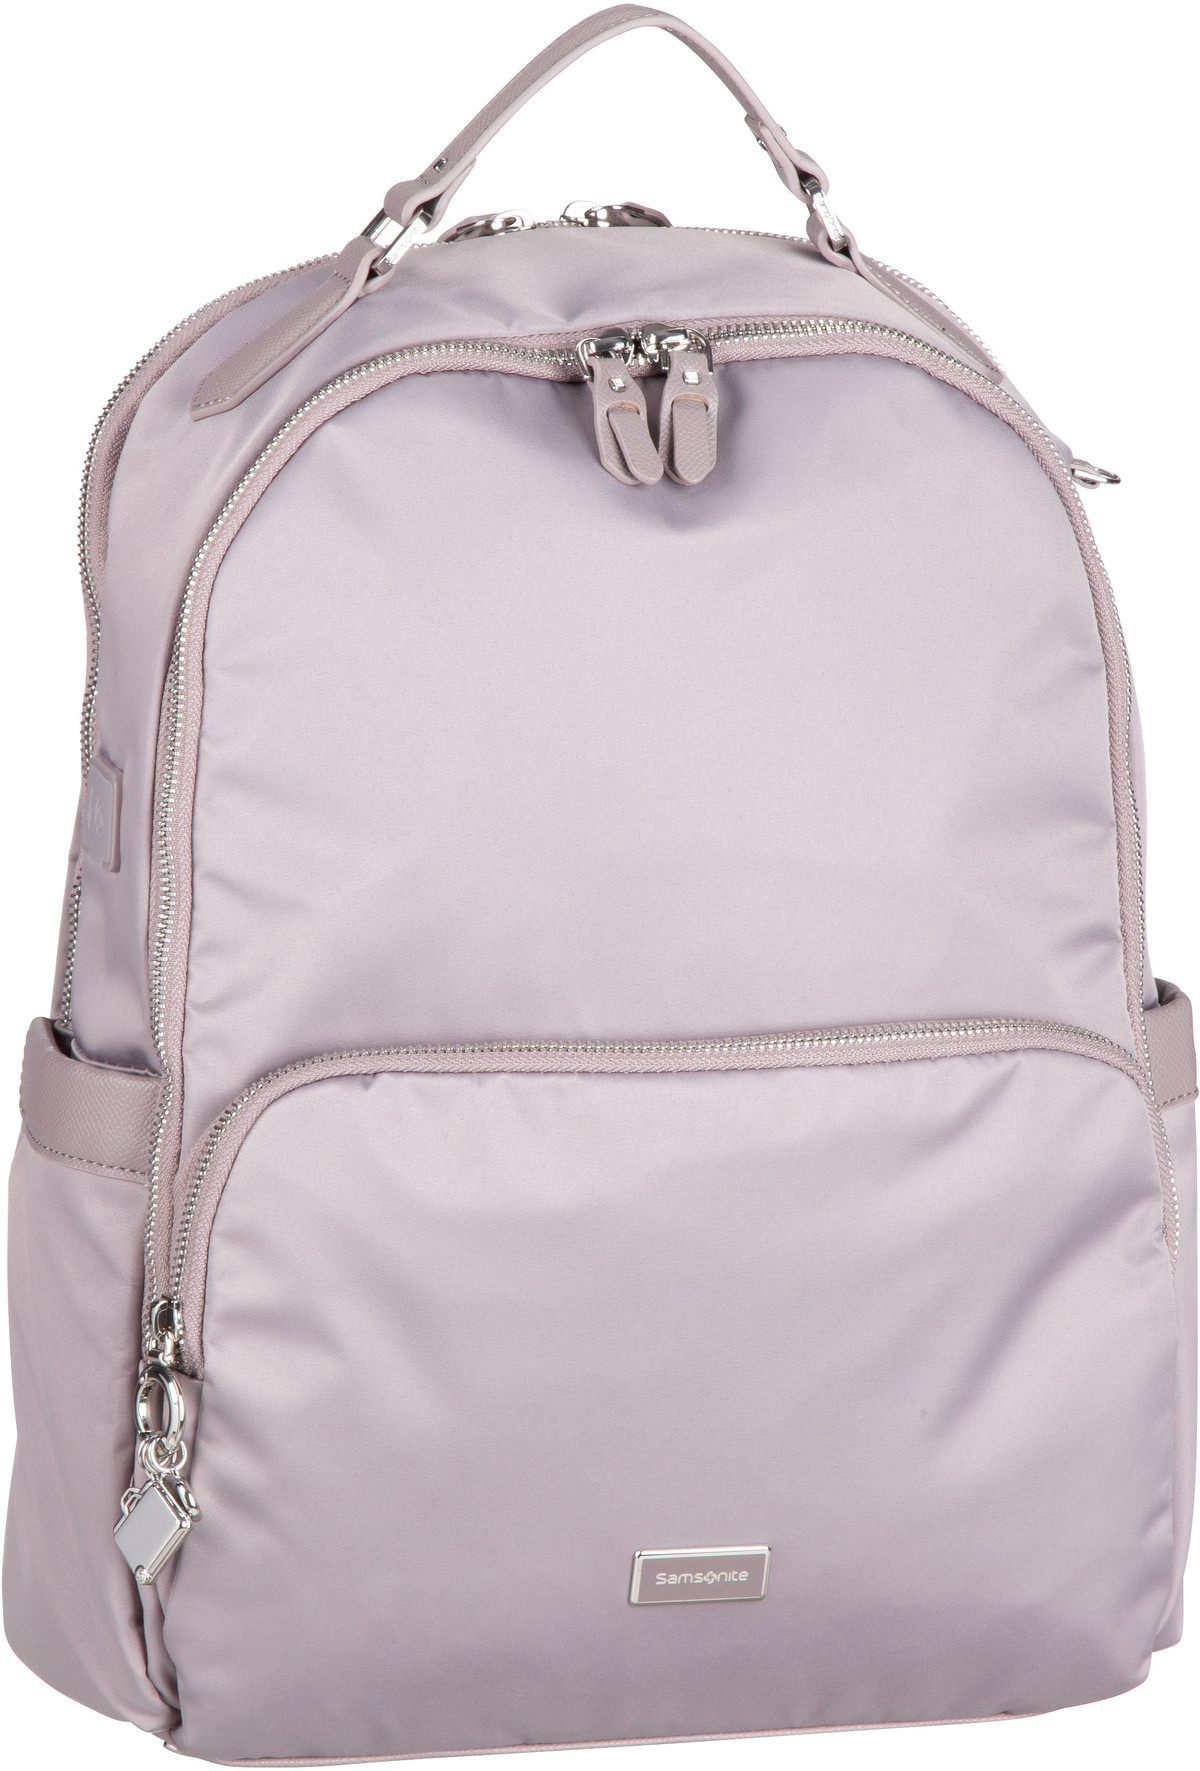 Samsonite Karissa Biz 2.0 Backpack 14.1'' - Lilac Grey